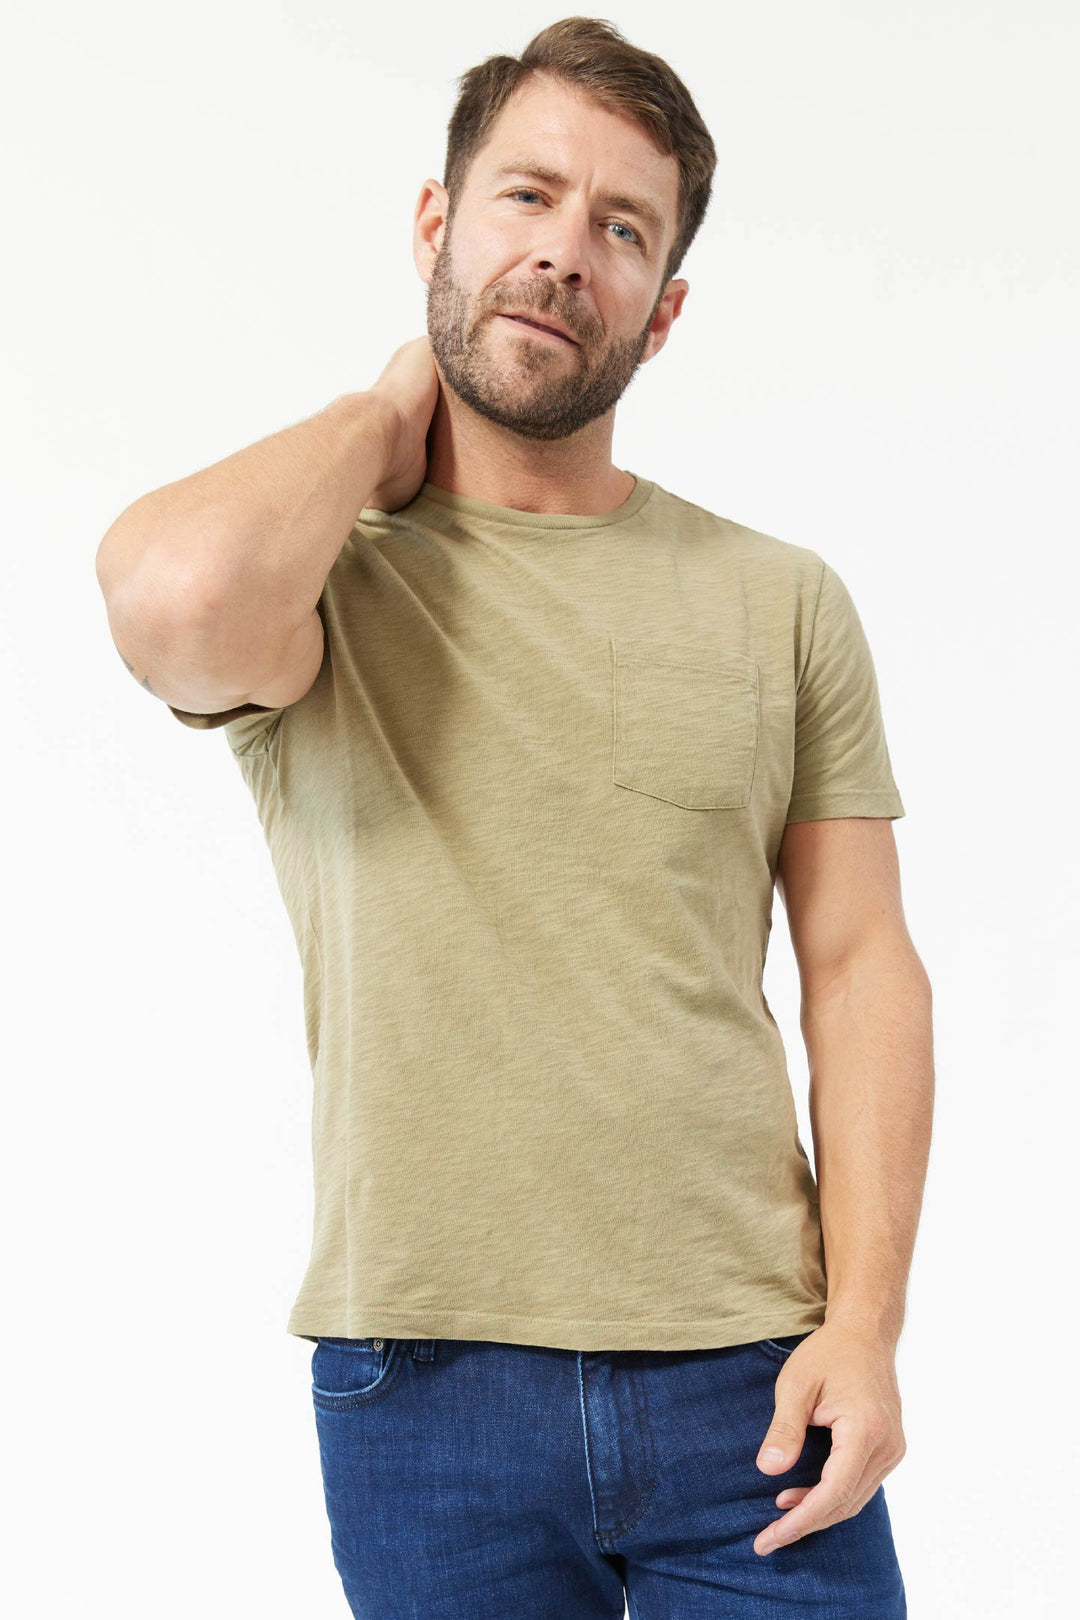 Buy Lightweight Washed Fatigue Slub Pima Cotton Crew Neck T-Shirt for Short Men | Ash & Erie   T-Shirts